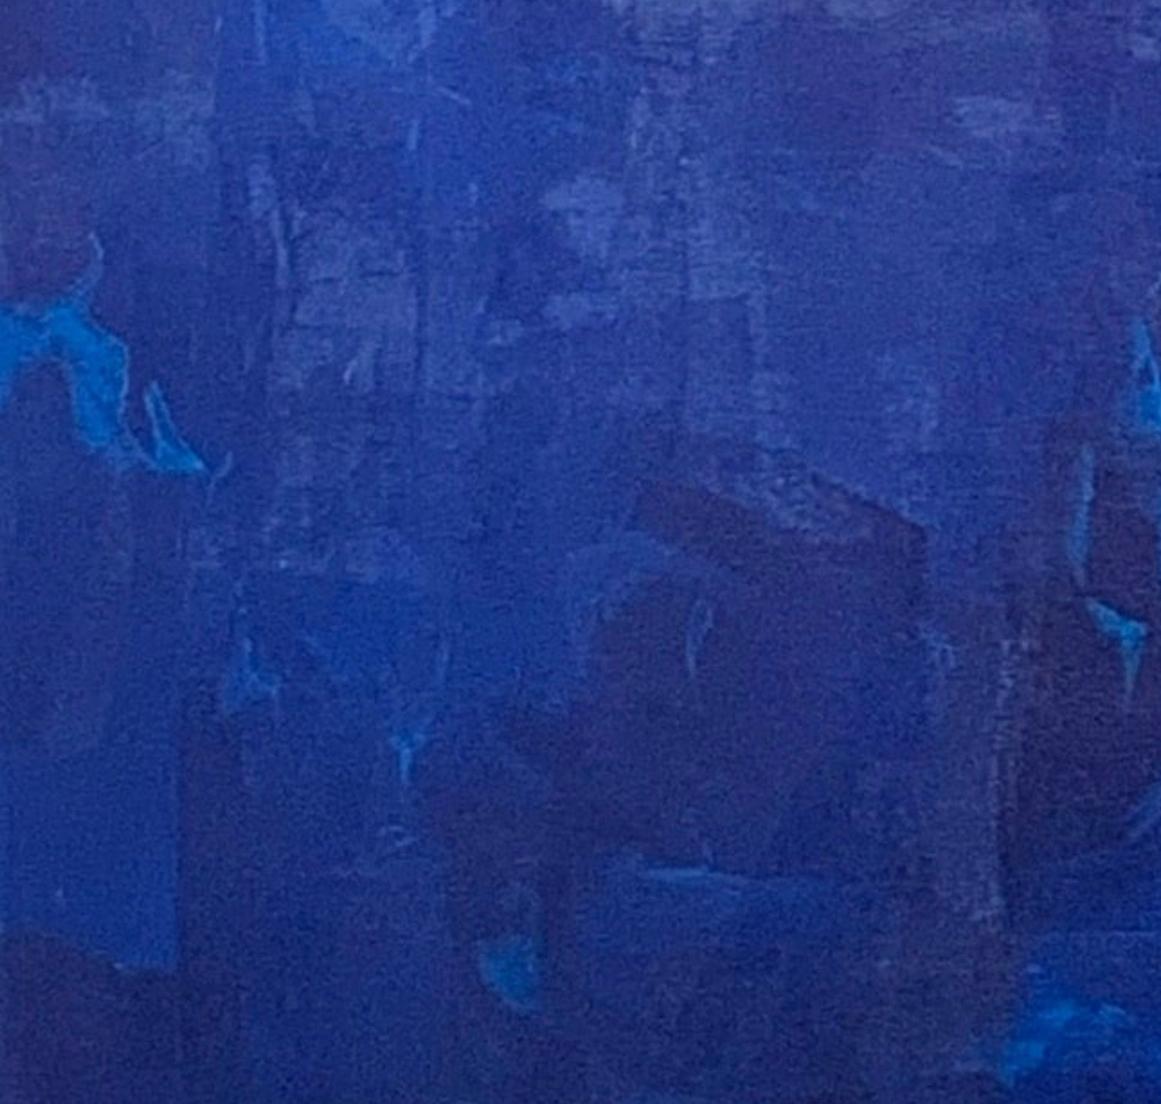 La mer profonde, océan contemporain, bleu foncé, essence de l'océan, art de Floride en vente 3